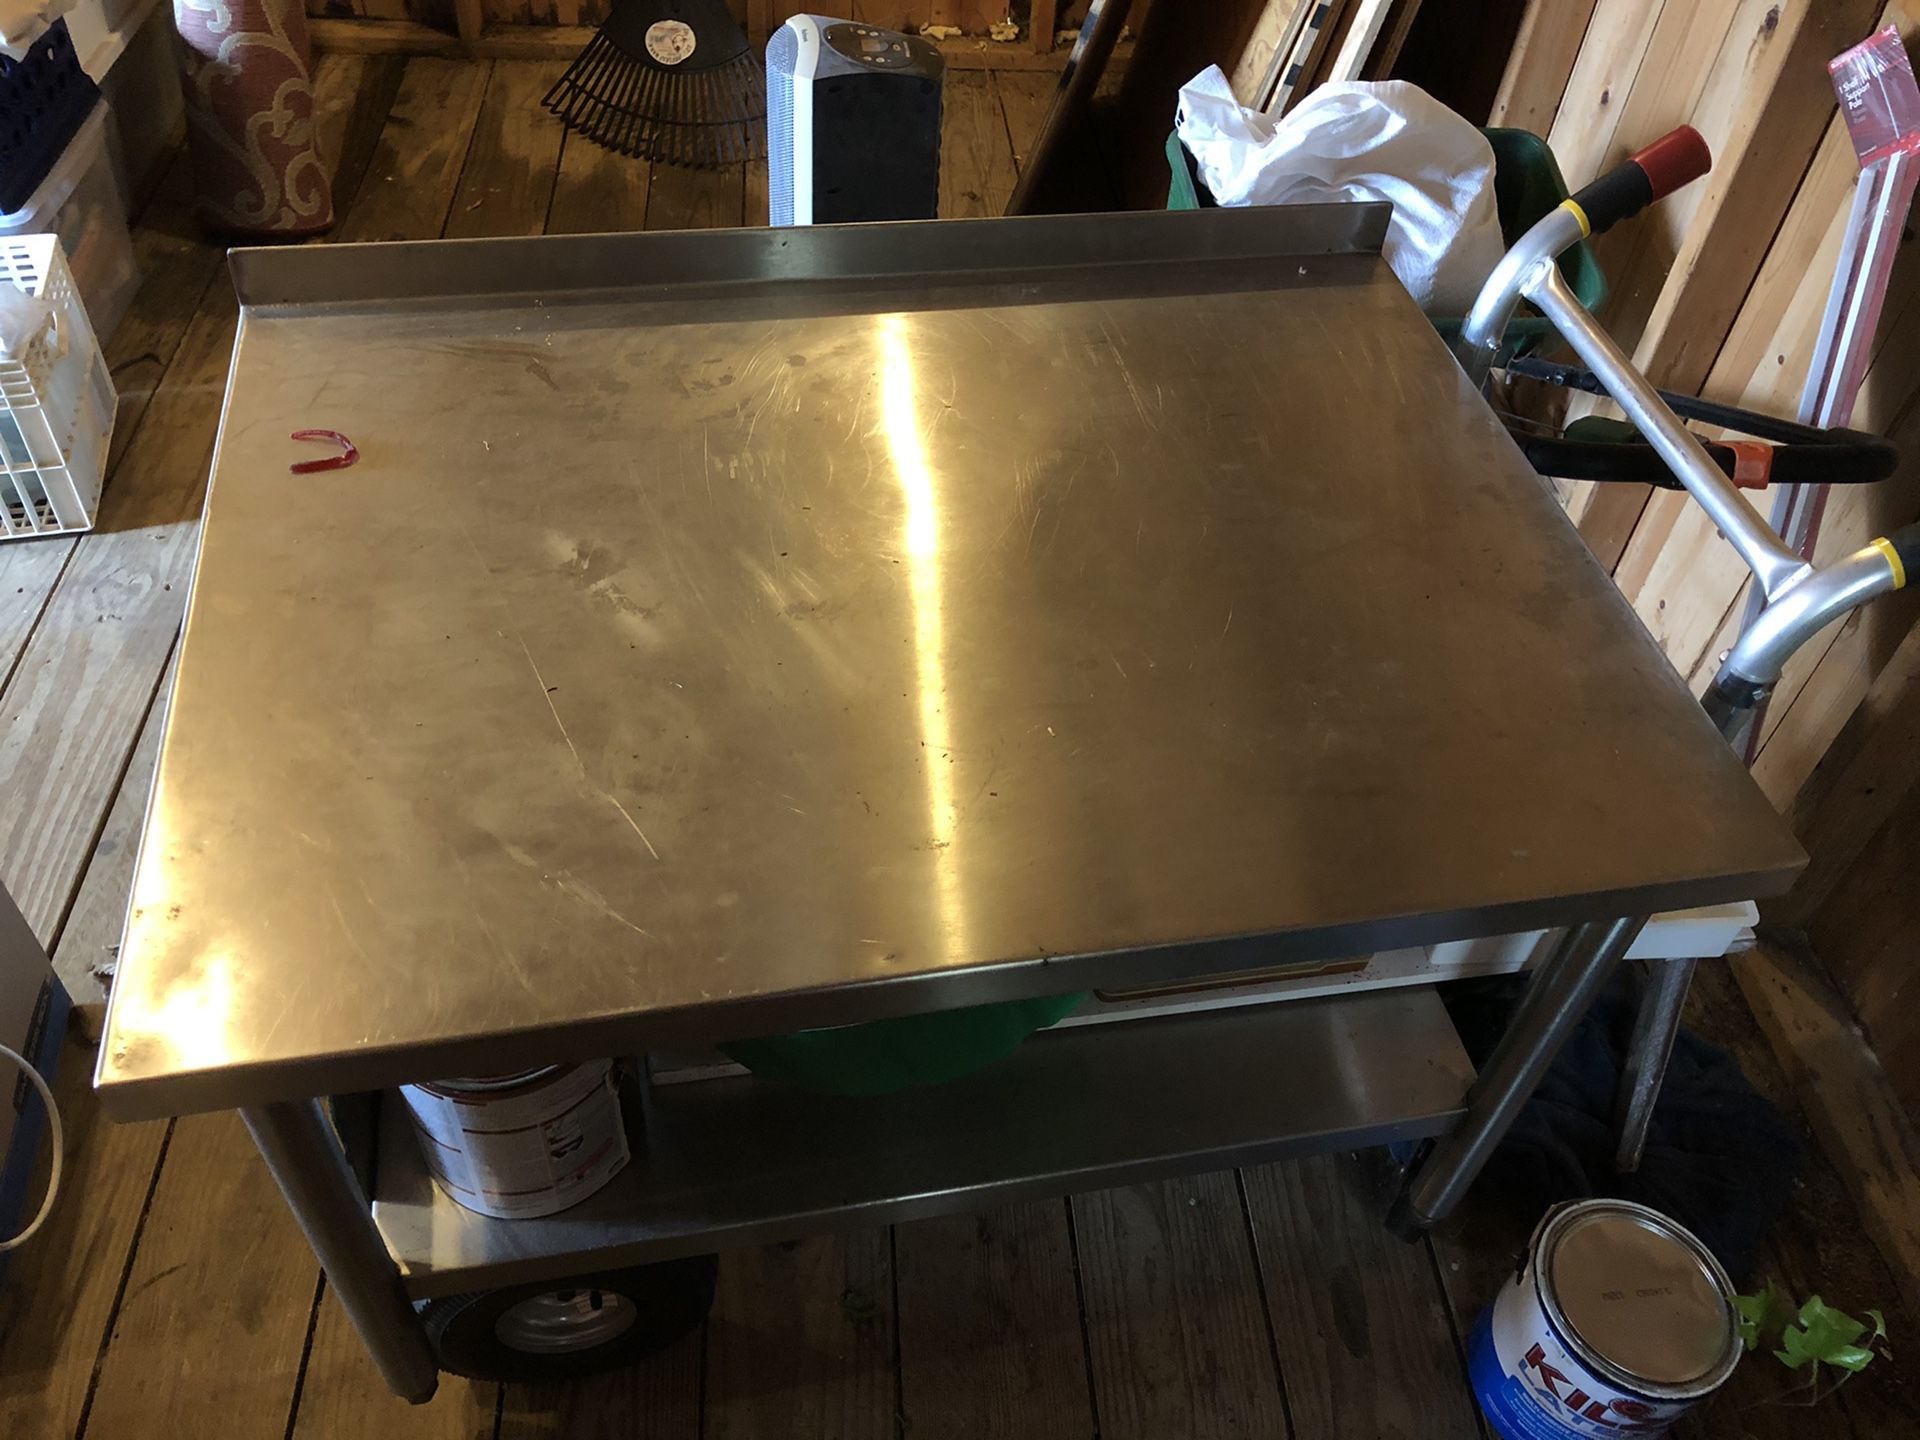 Prep table, Stainless steel